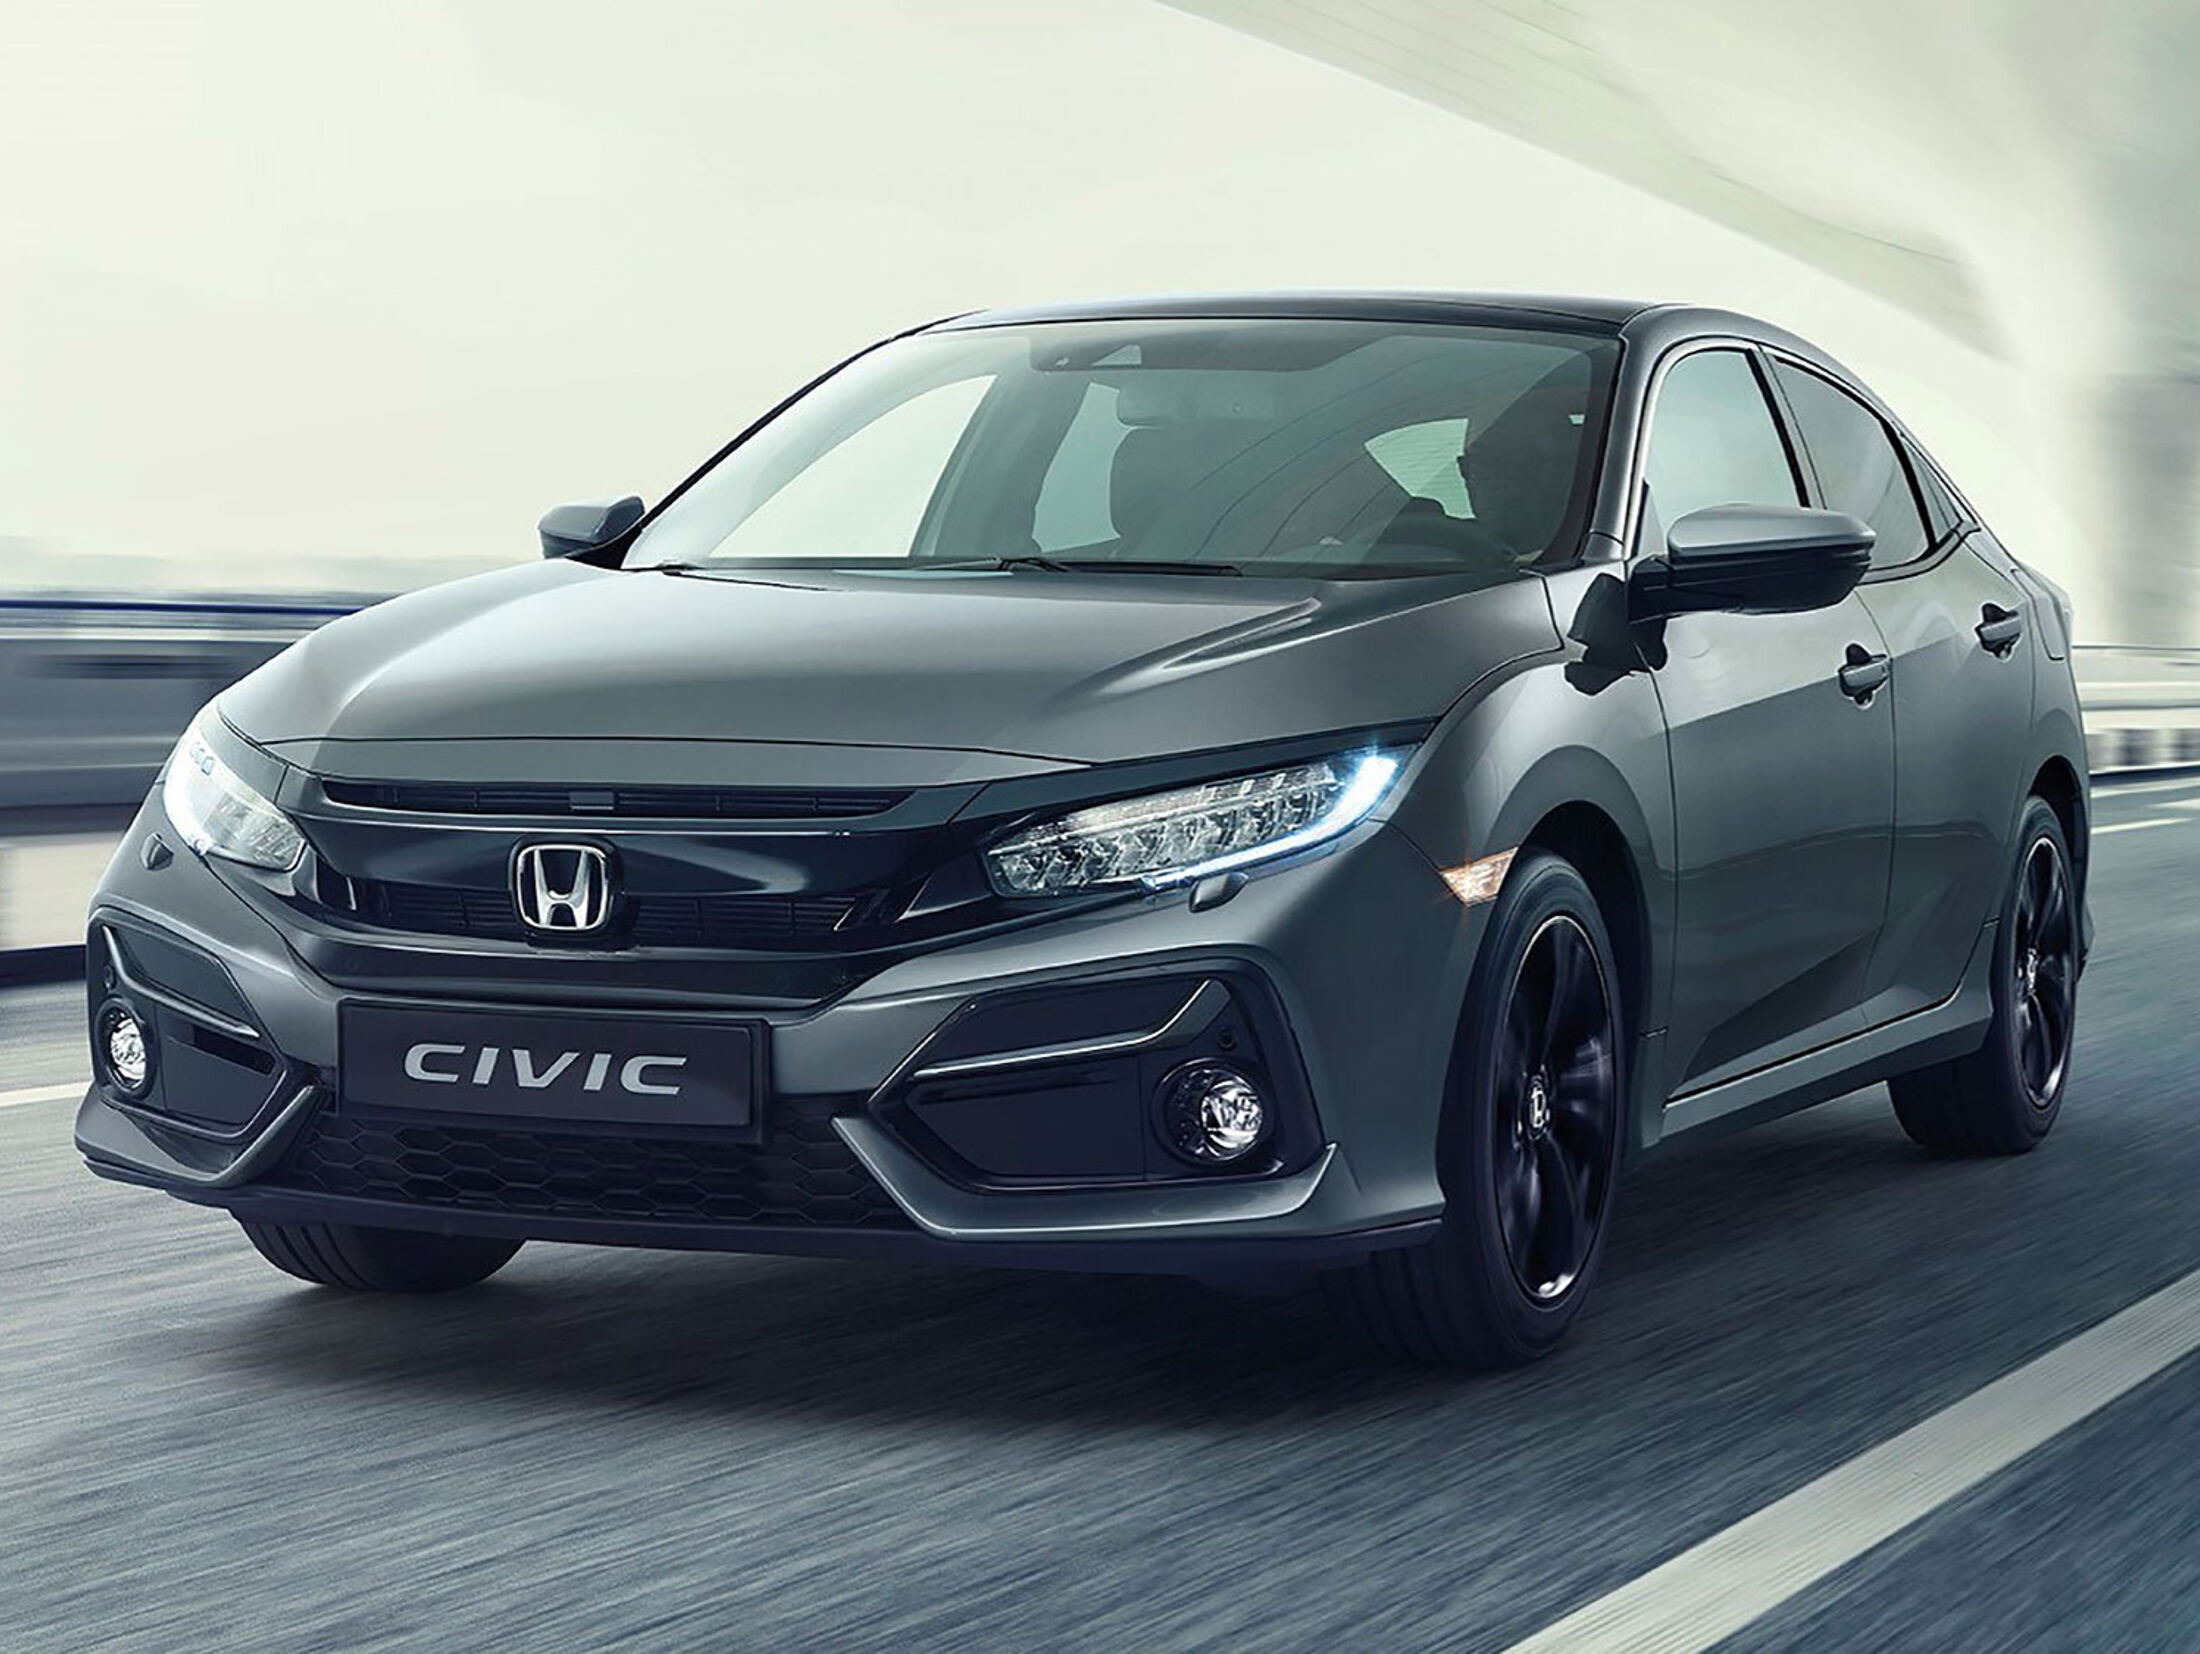 https://imgr1.auto-motor-und-sport.de/Honda-Civic-Facelift-2020-jsonLd4x3-88d34c50-1647891.jpg